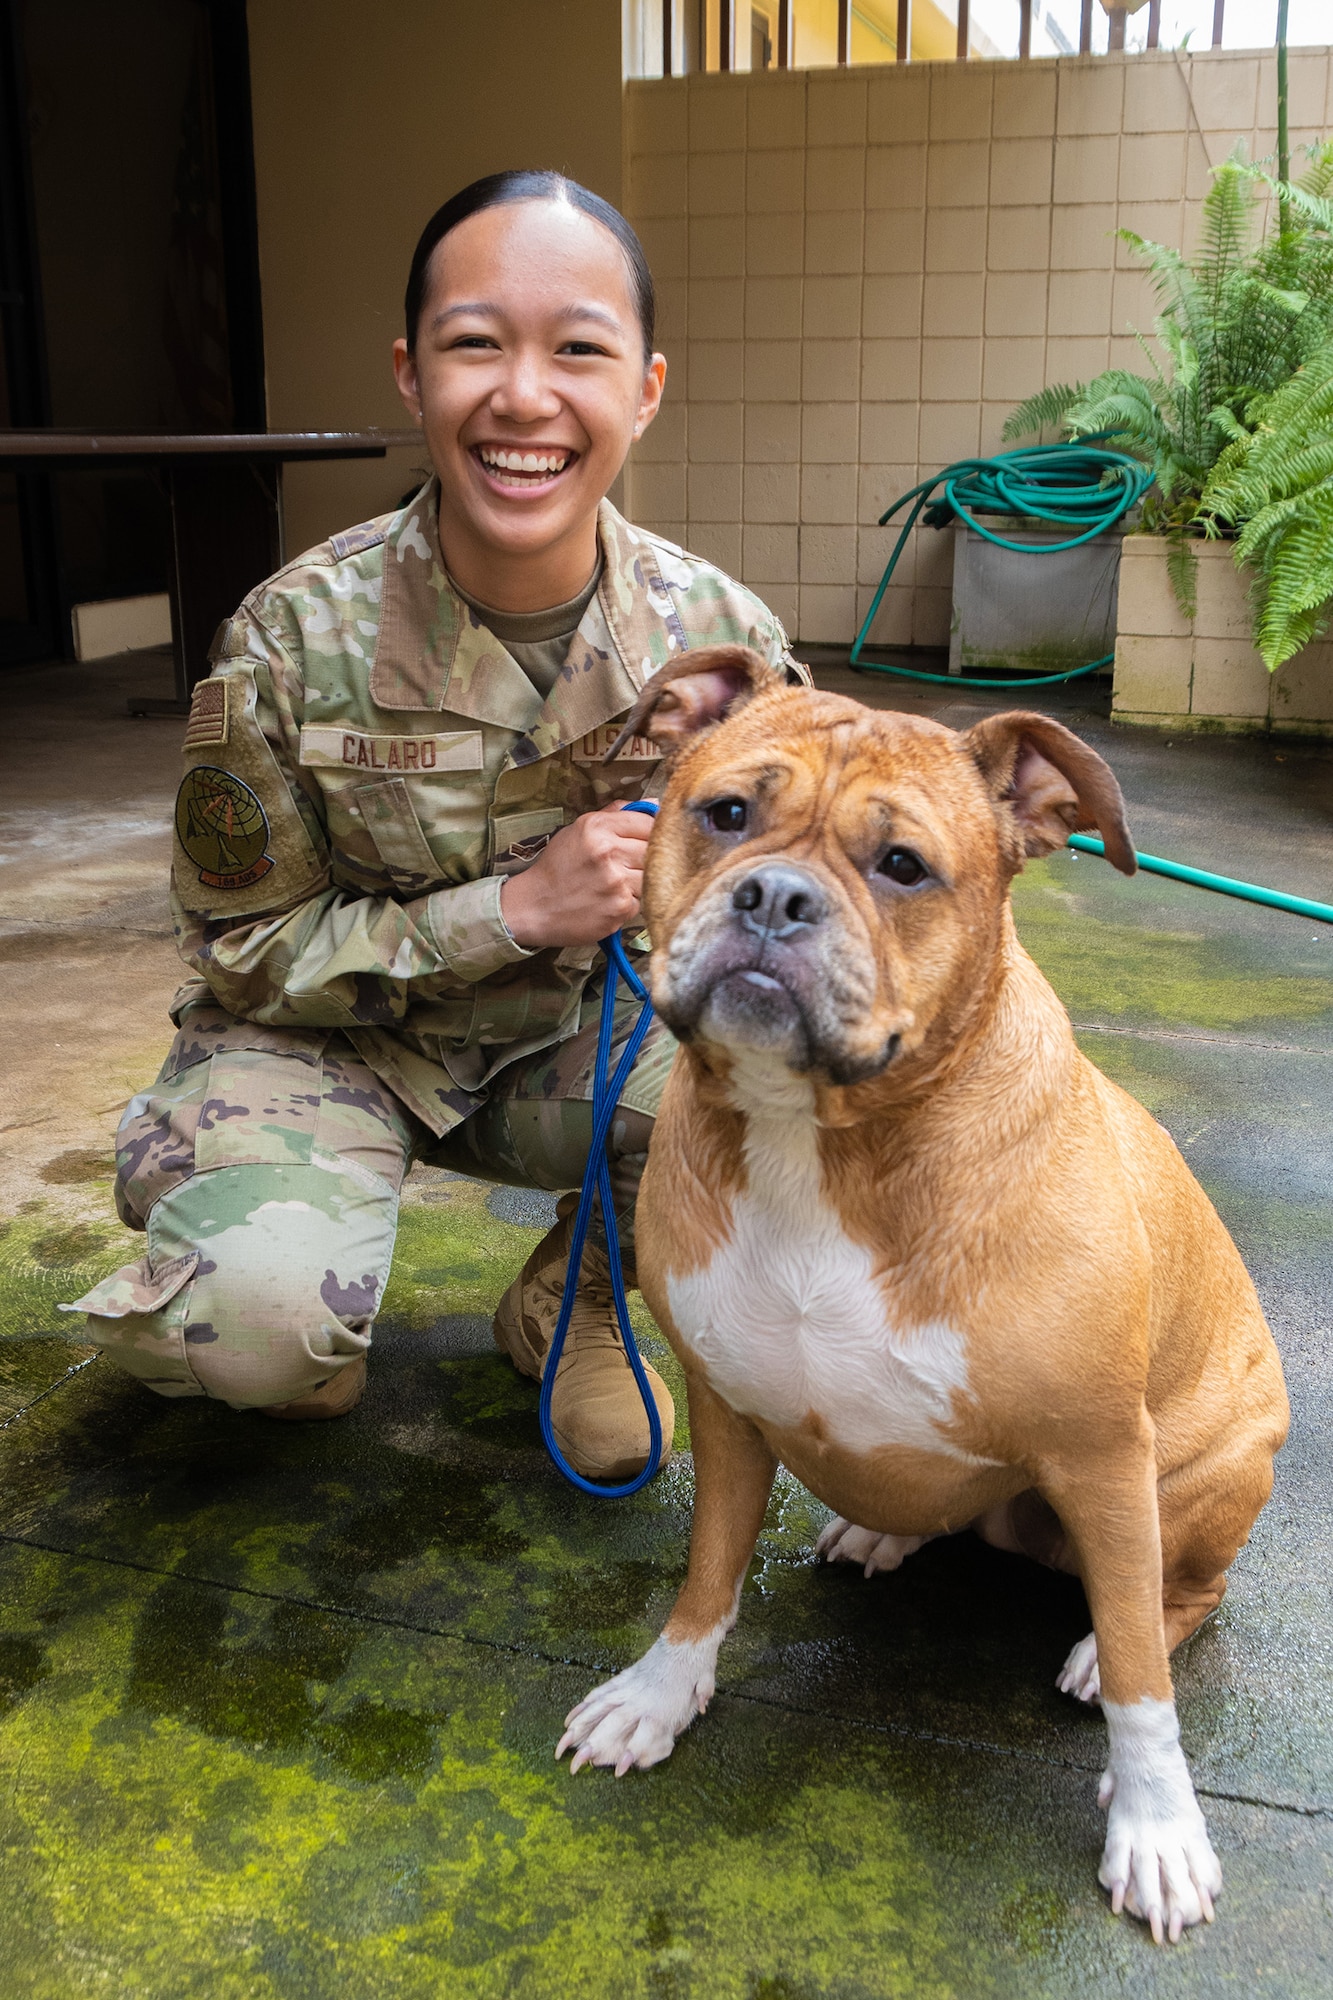 U.S. Air Force Airman 1st Class Faith Calaro, 169th Air Defense Squadron surveillance technician, kneels alongside Ruby the dog on June 3, 2023 at Wheeler Army Airfield, Hawaii.